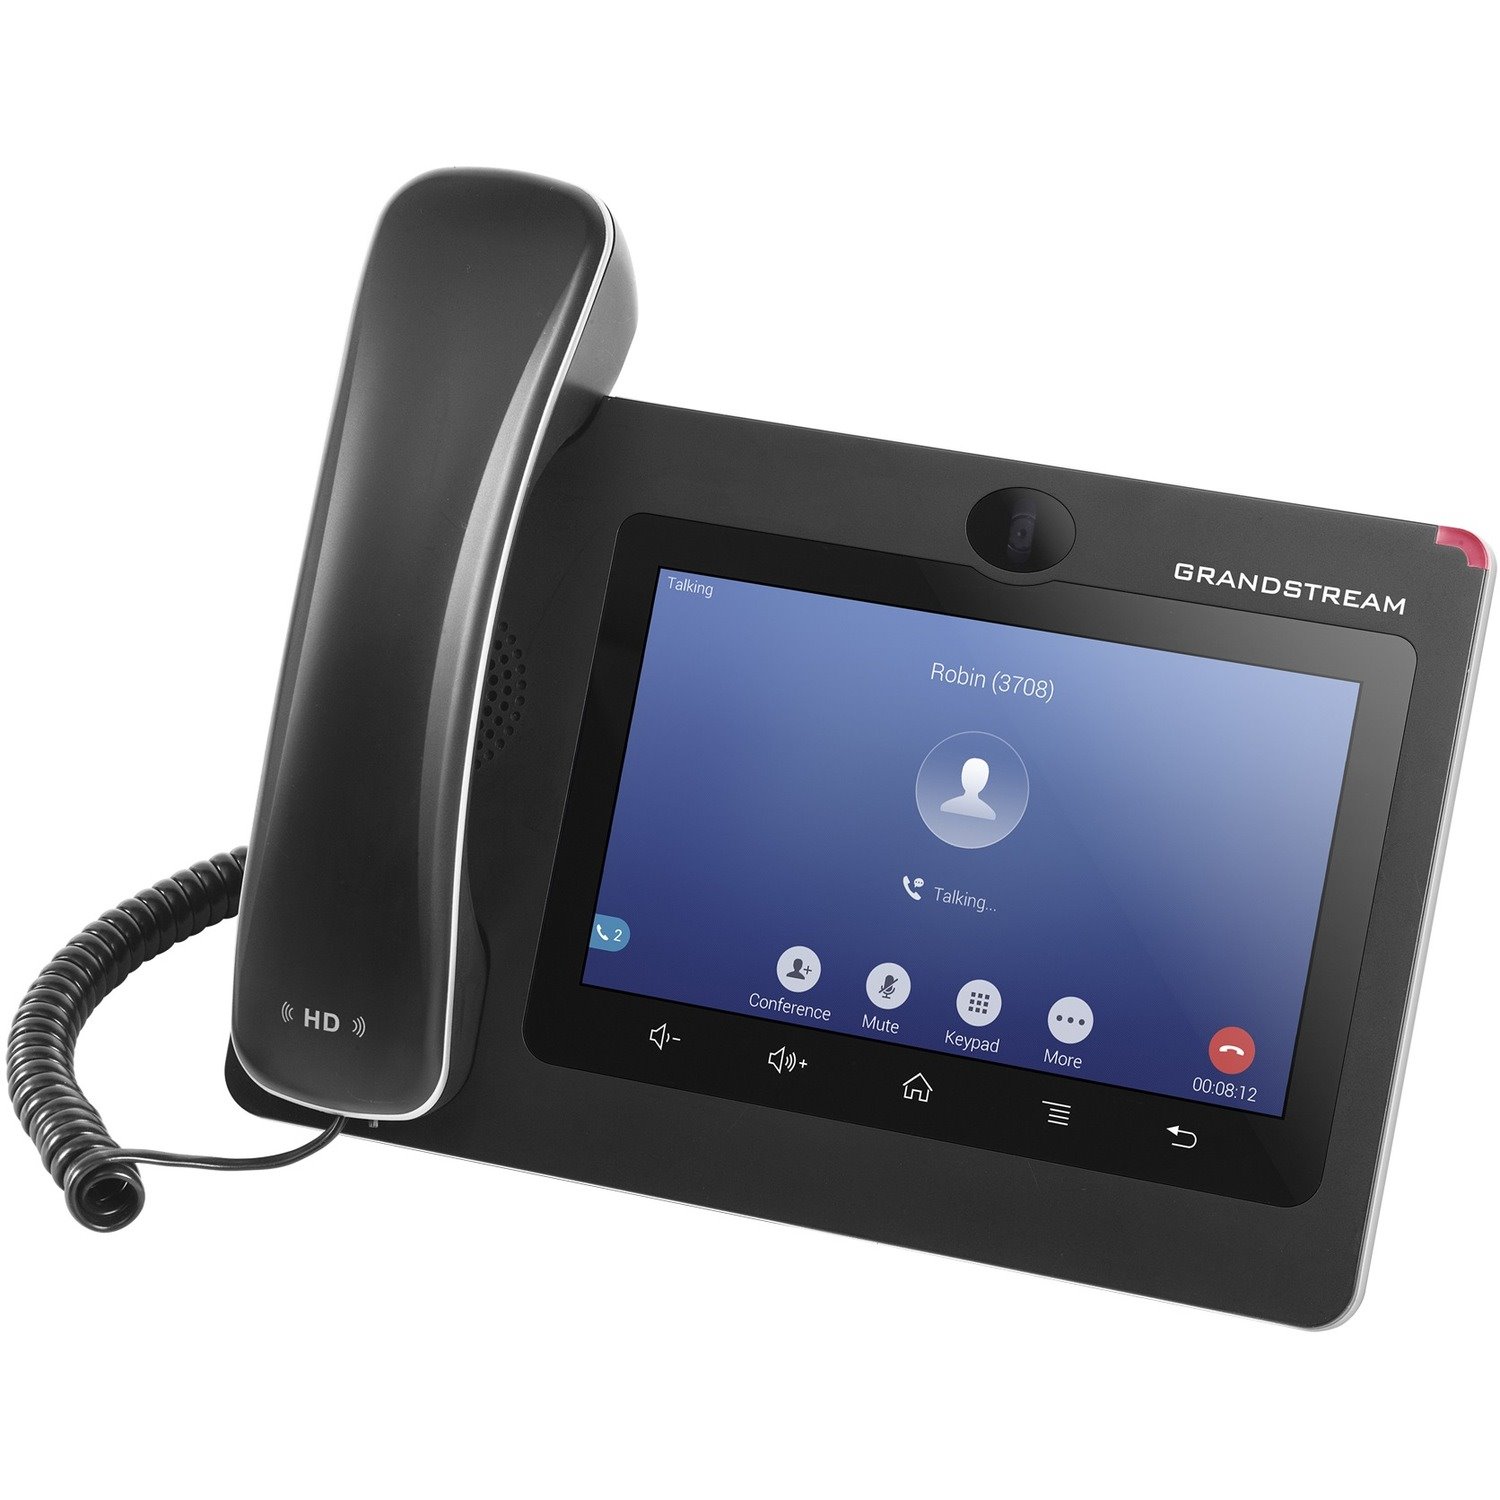 Grandstream GXV3370 IP Phone - Corded - Corded/Cordless - Bluetooth, Wi-Fi - Desktop, Wall Mountable - Black